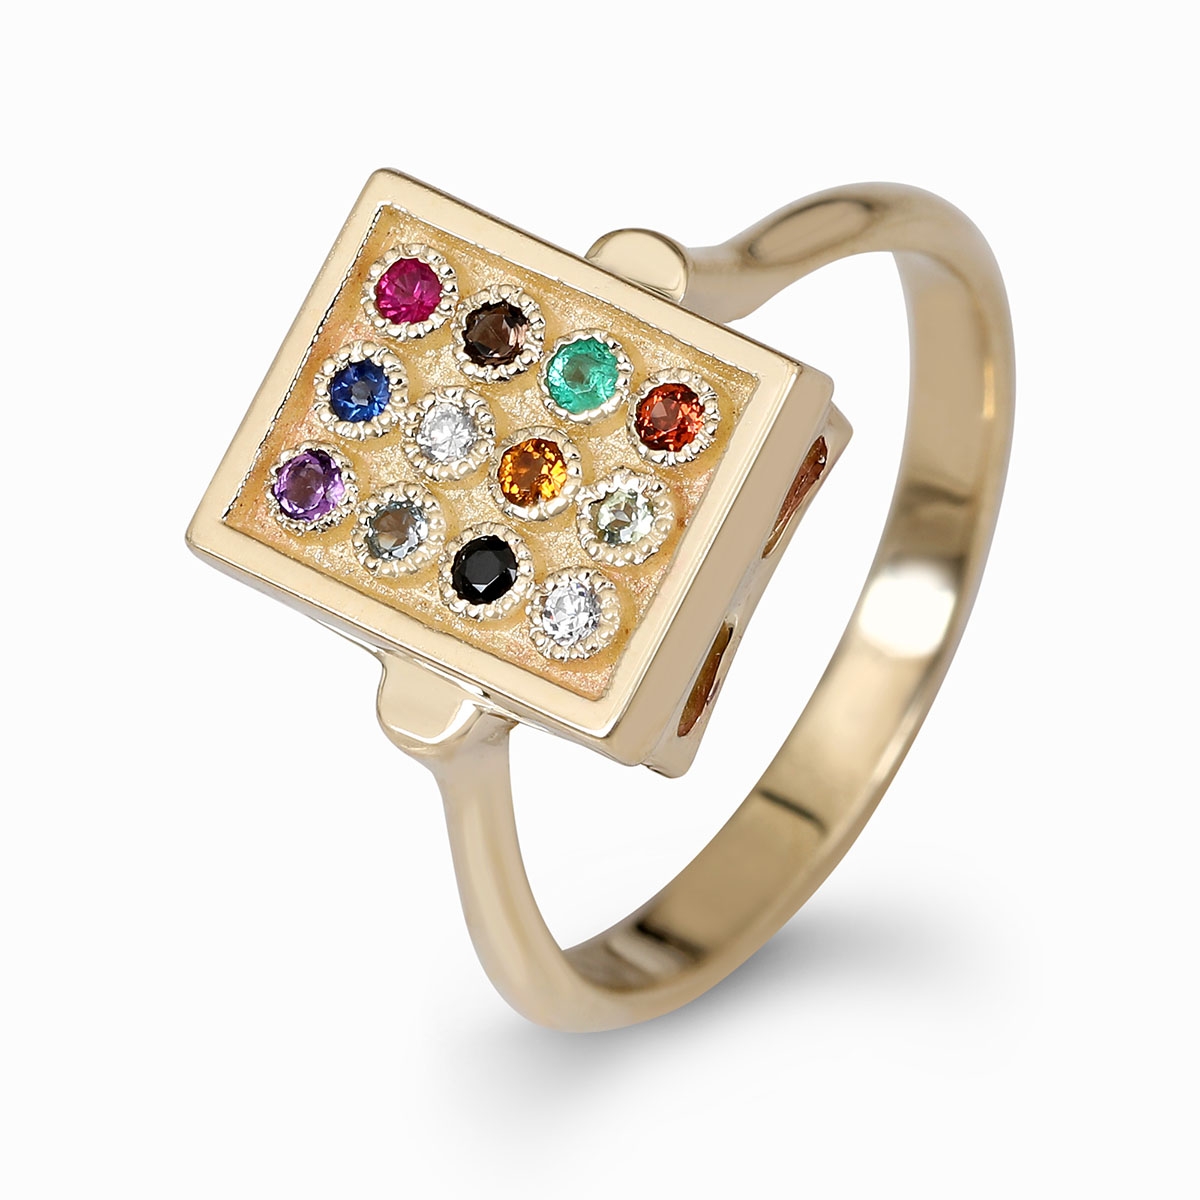 Anbinder Jewelry 14K Yellow Gold Choshen Ring for Women - 1